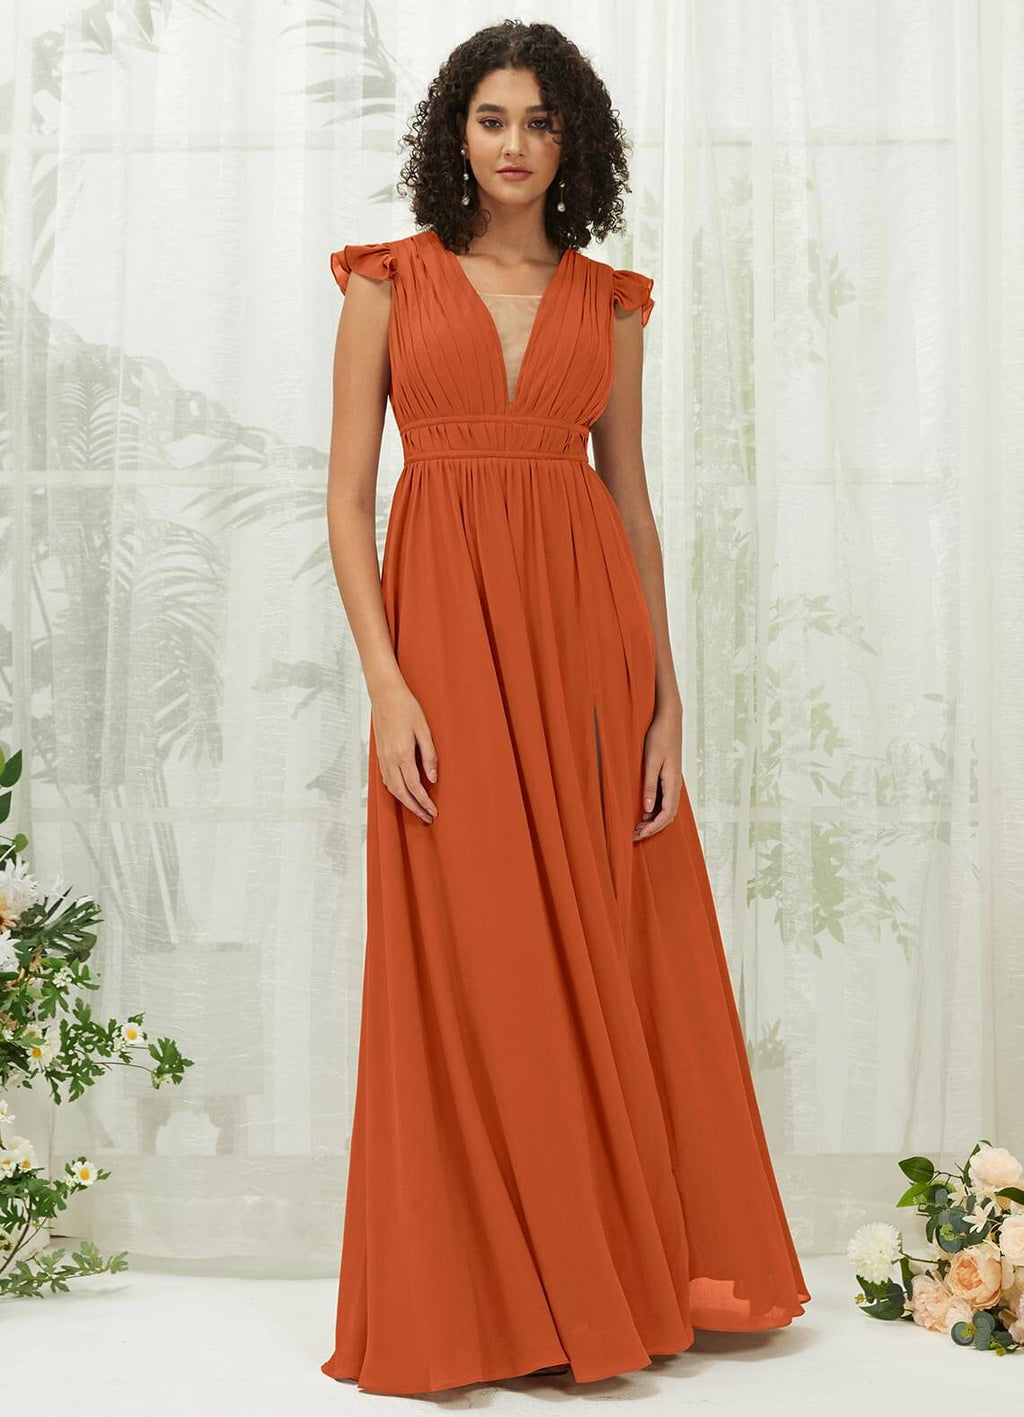 NZ Bridal Burnt Orange Cap Sleeves Chiffon bridesmaid dresses R0410 Collins a